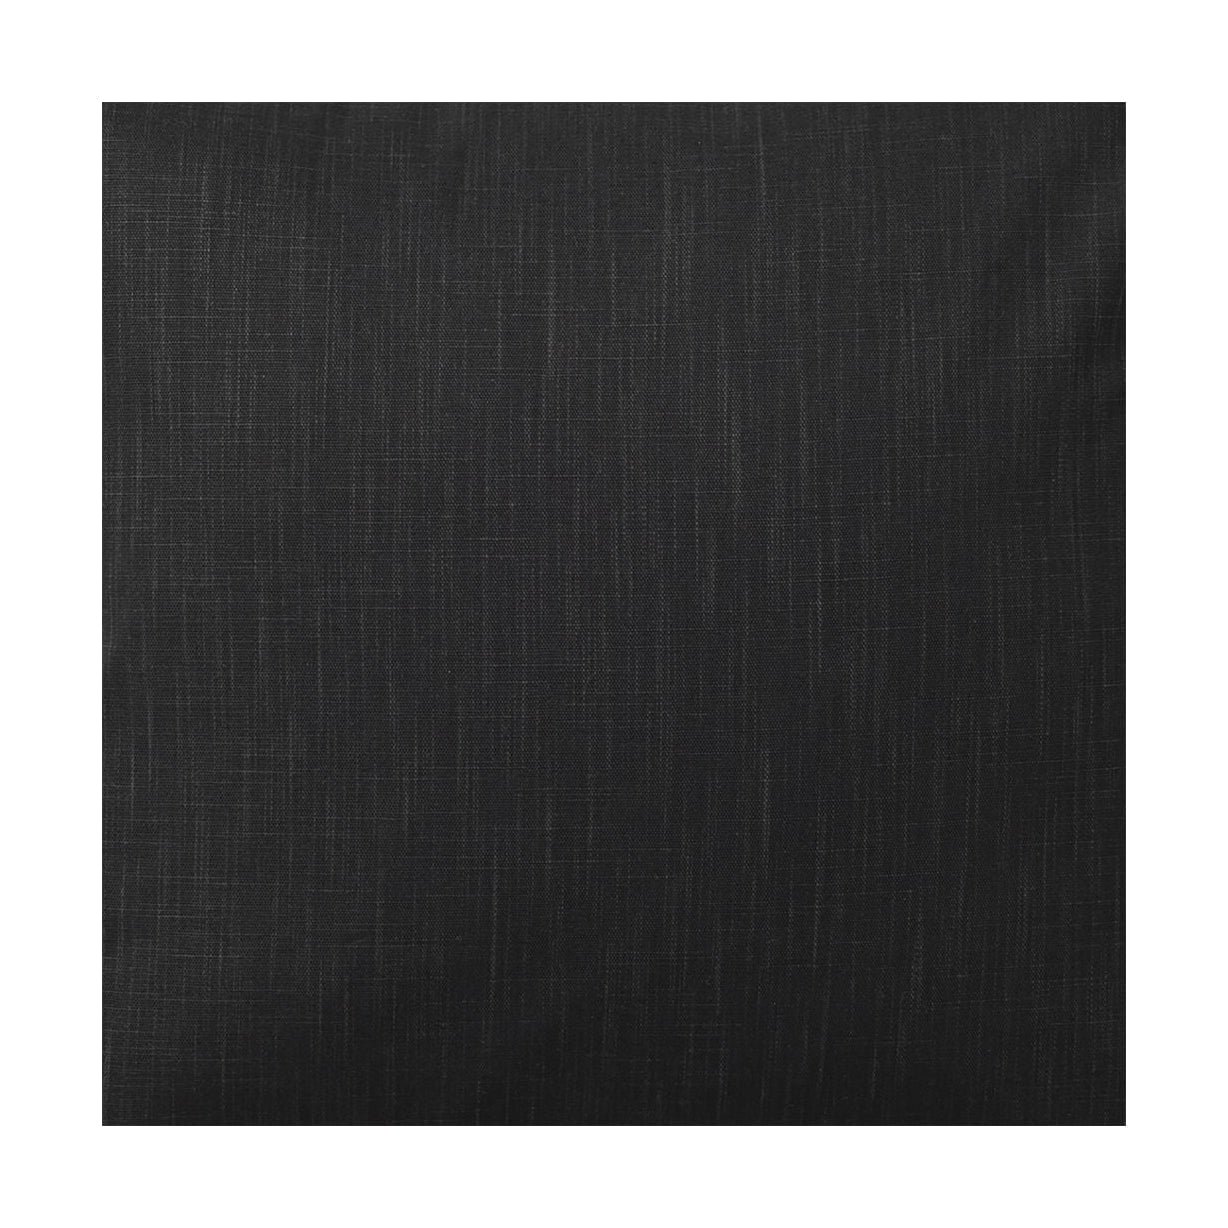 Spira Klotz šířka tkaniny 150 cm (cena za metr), asfalt